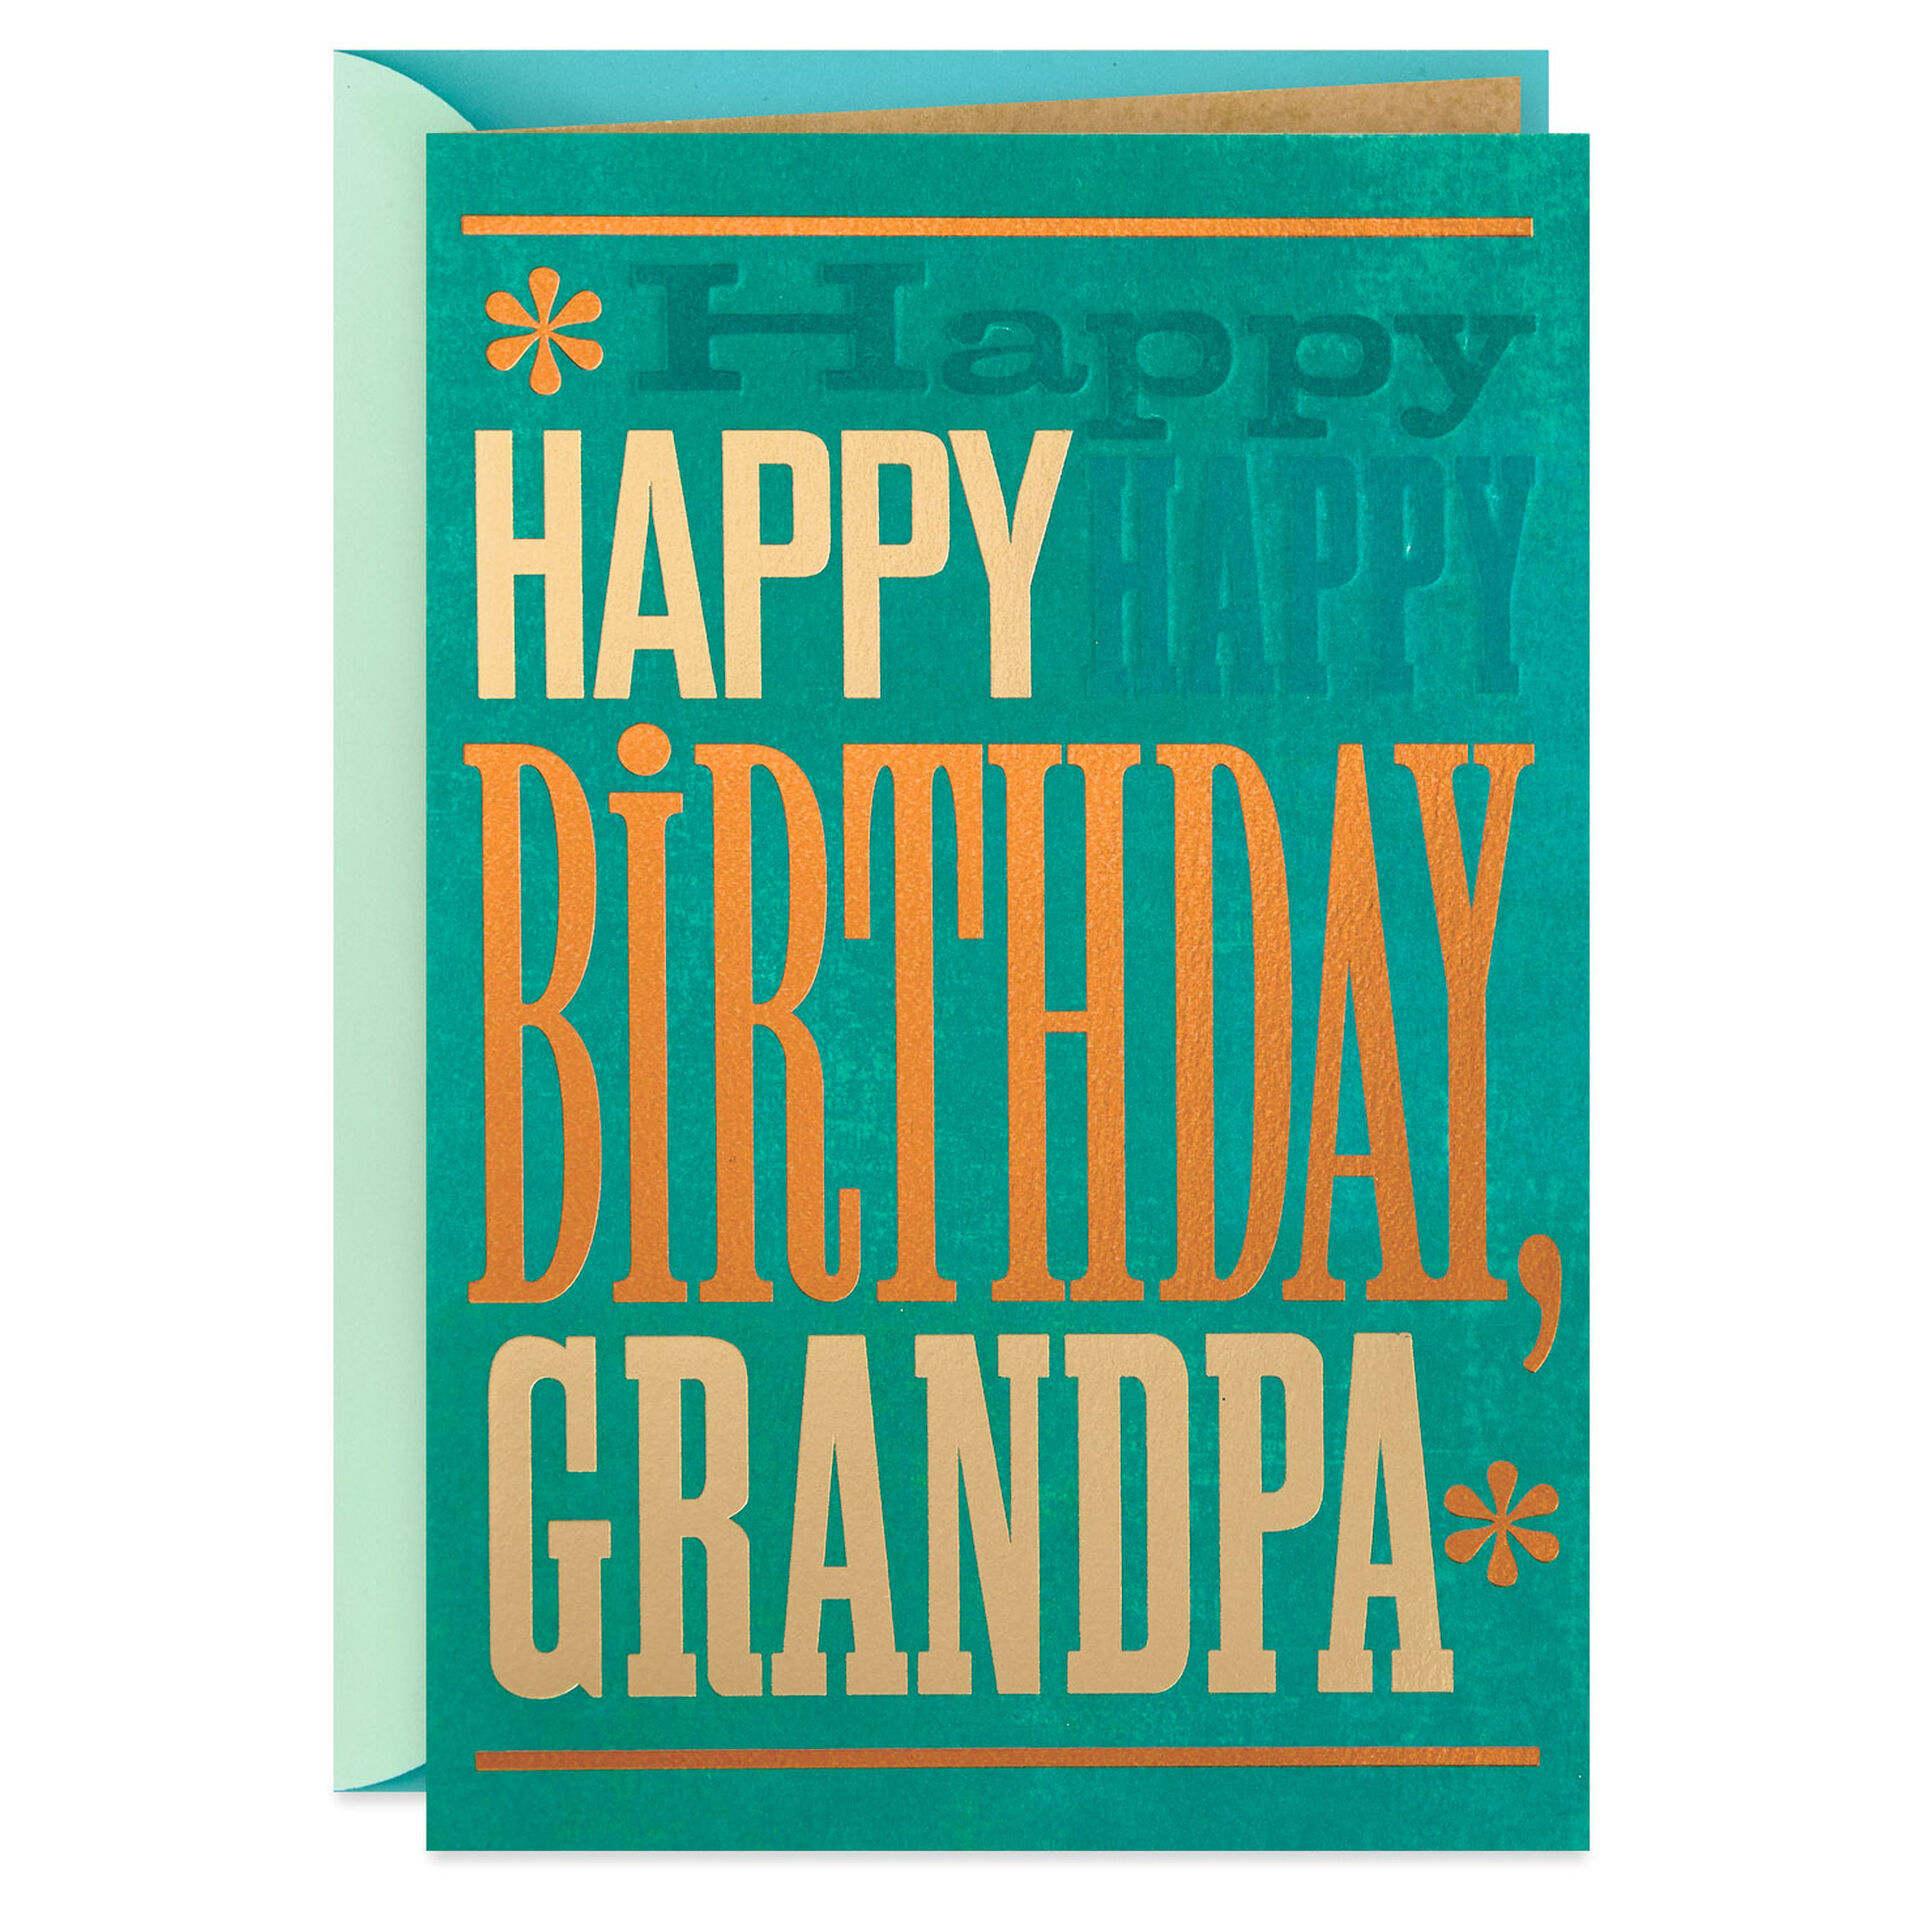 Download Happy Happy Happy Birthday Card For Grandpa Greeting Cards Hallmark